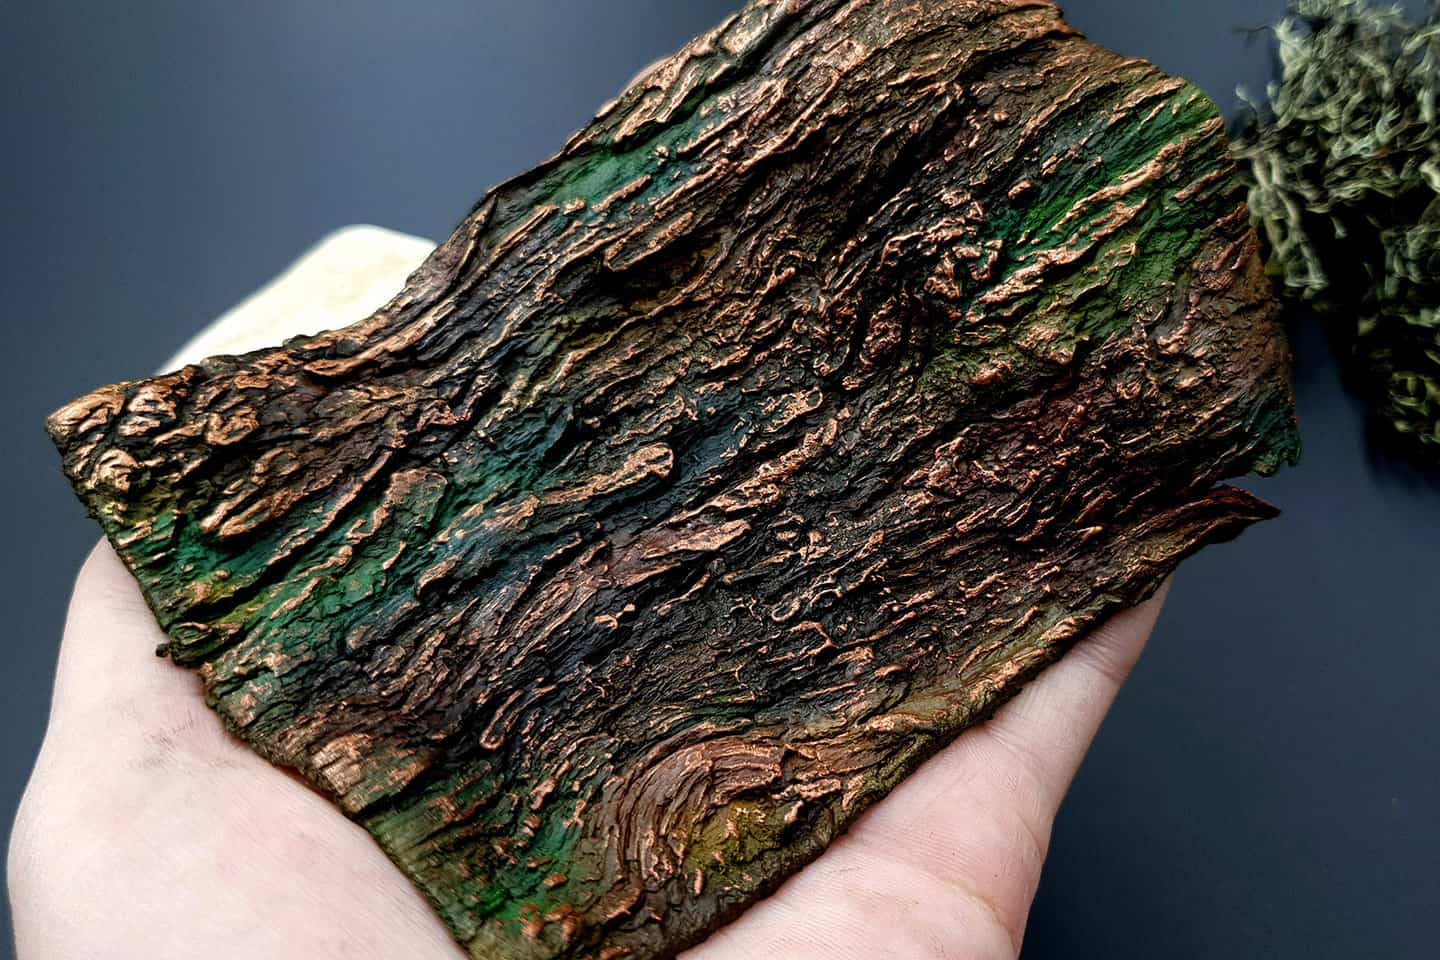 Silicone Texture Bark of Thai Pine Tree #1 (13118)